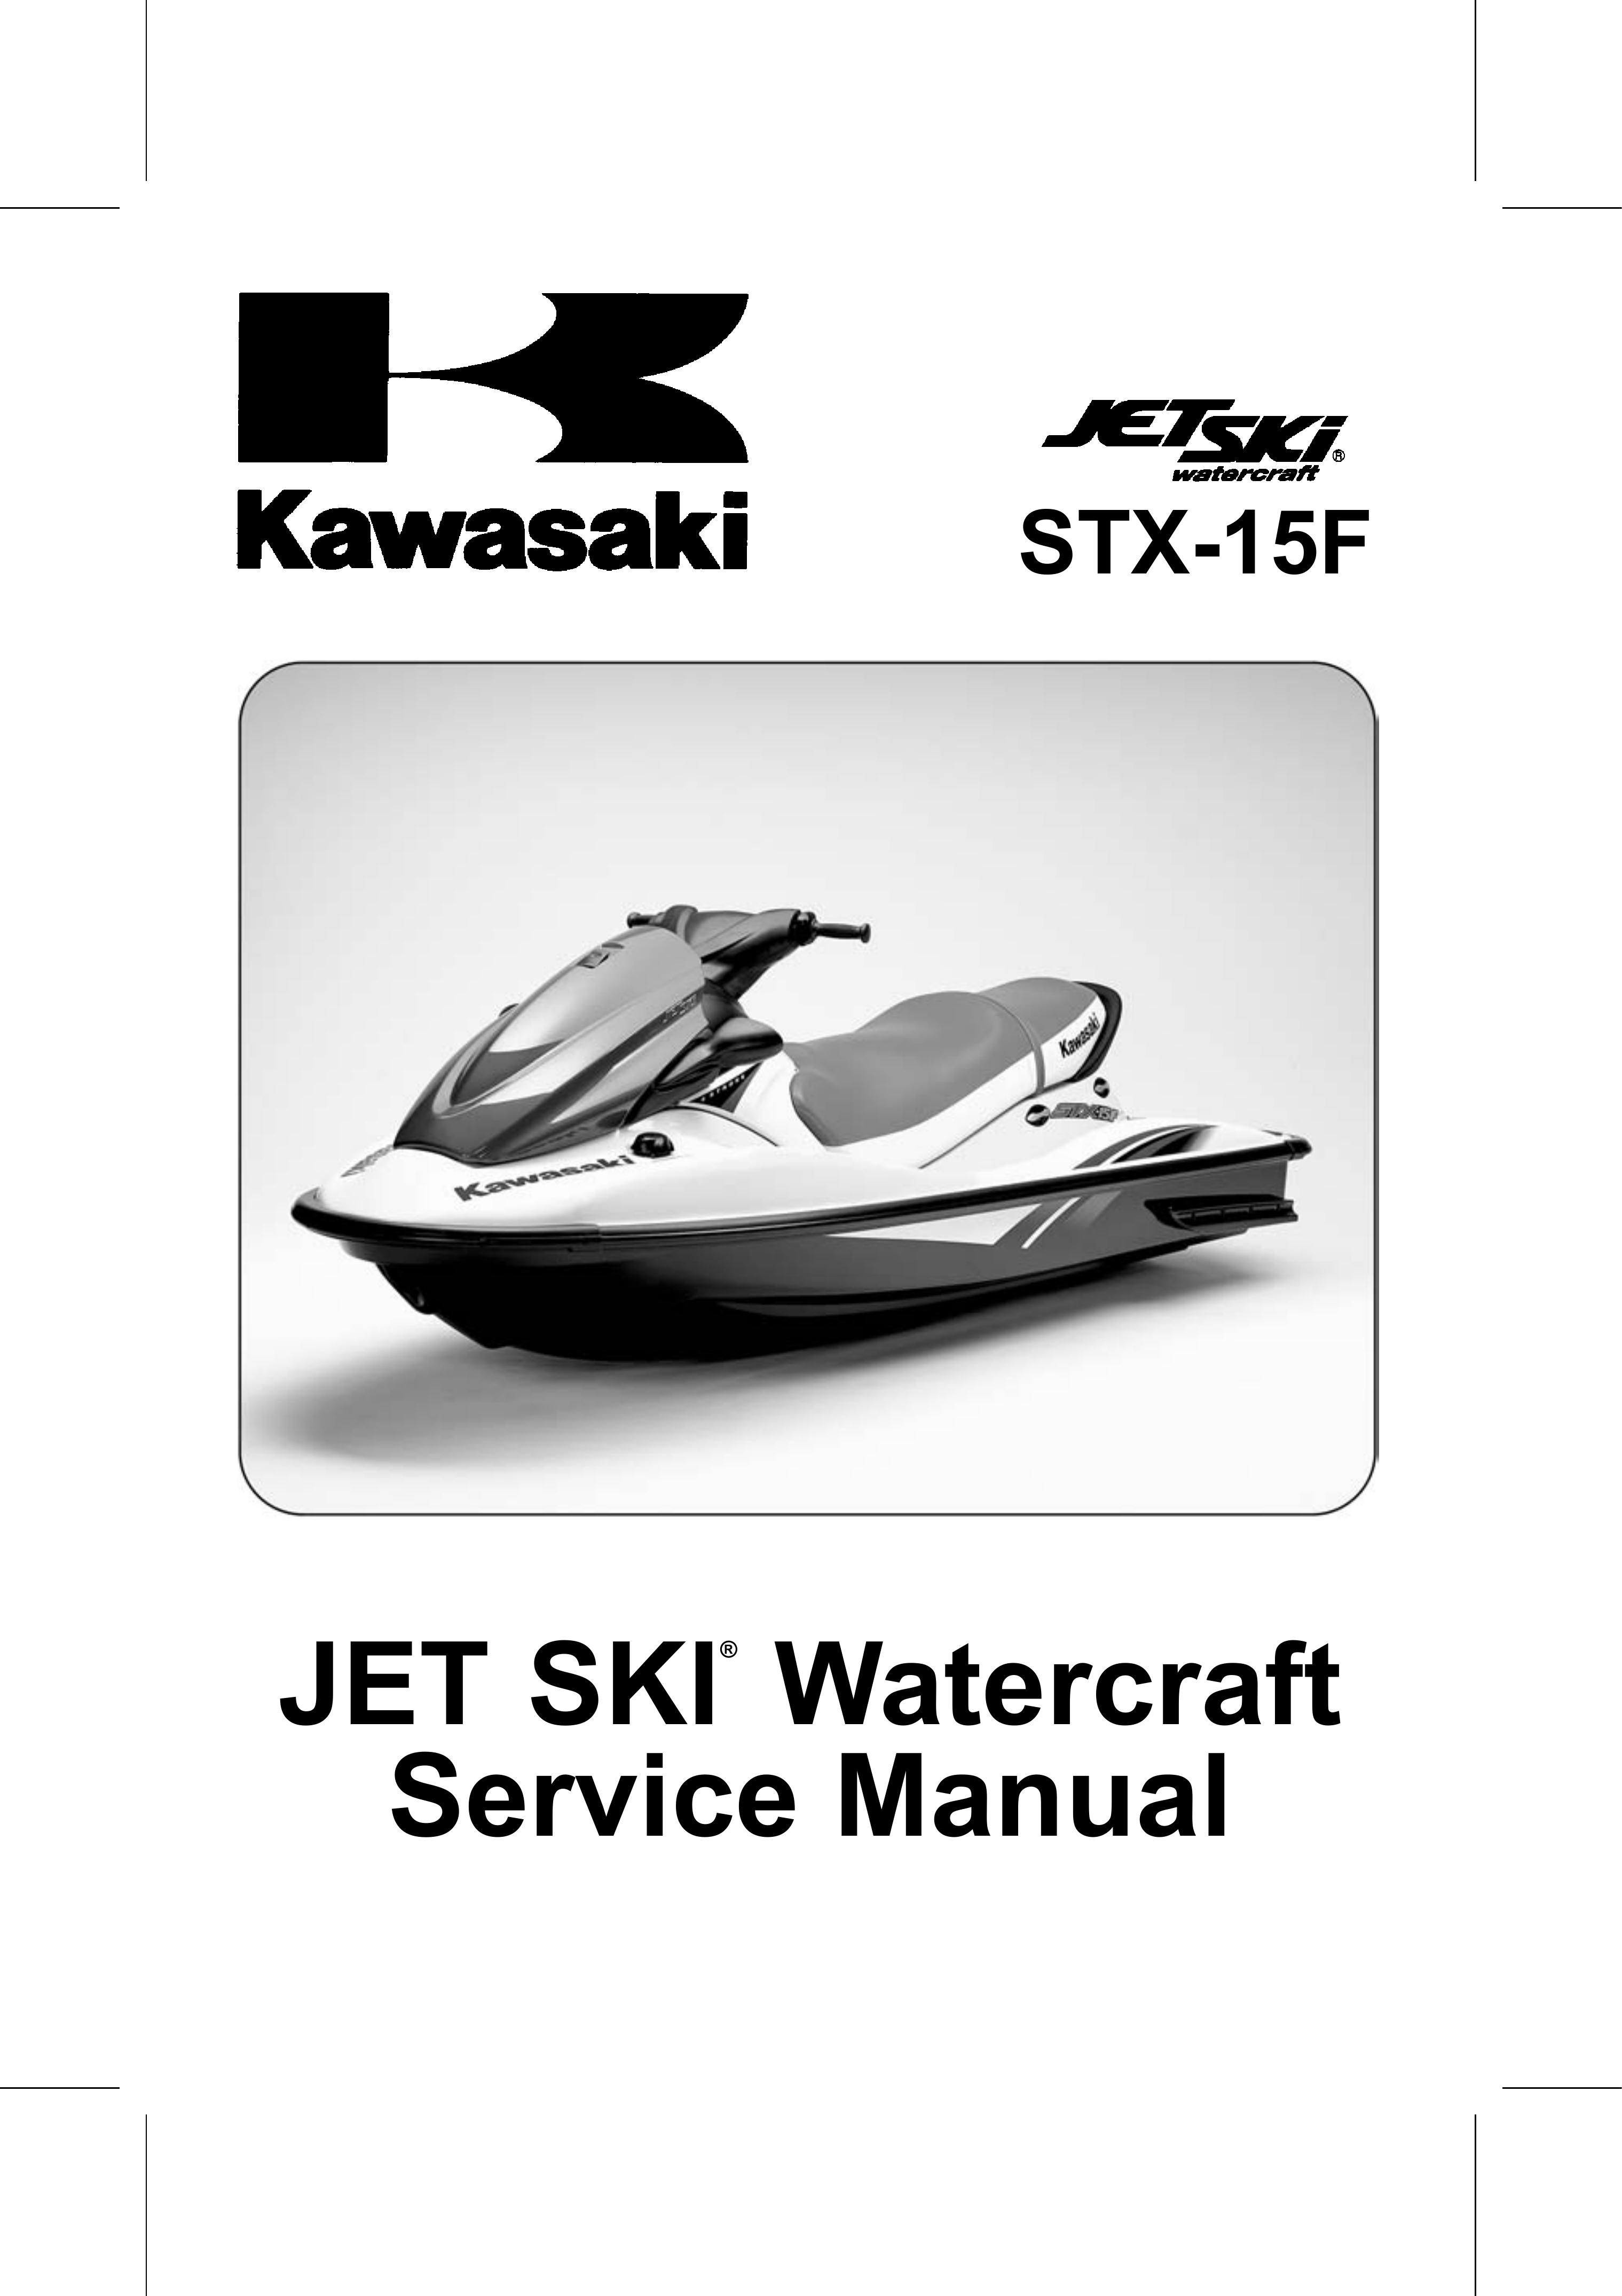 Kawasaki STX-15F Jet Ski User Manual